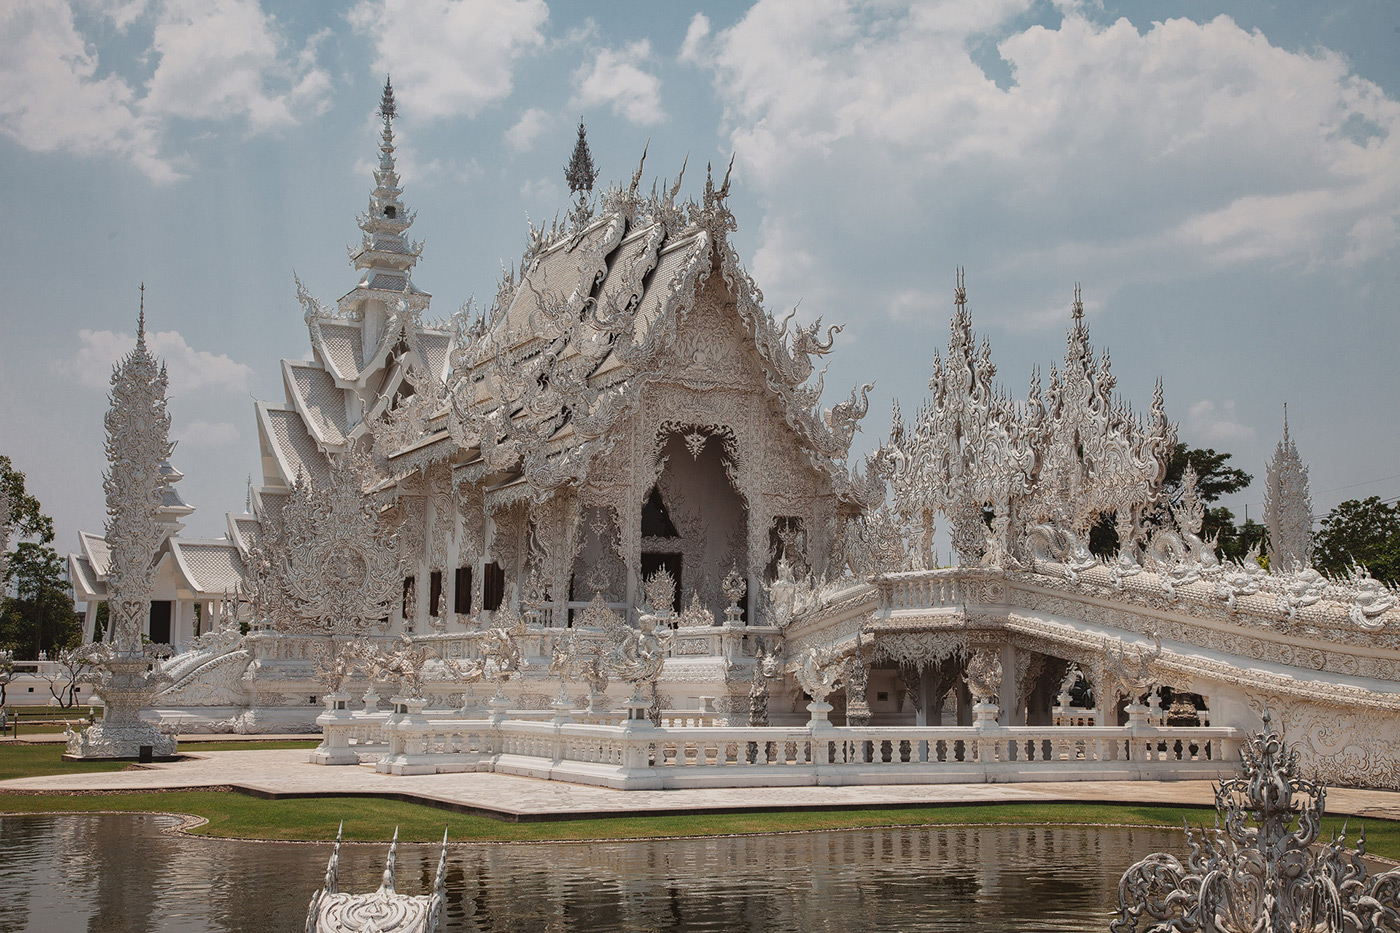 Thailand chiang Mai rai Wat temple White buddhism bar elephant